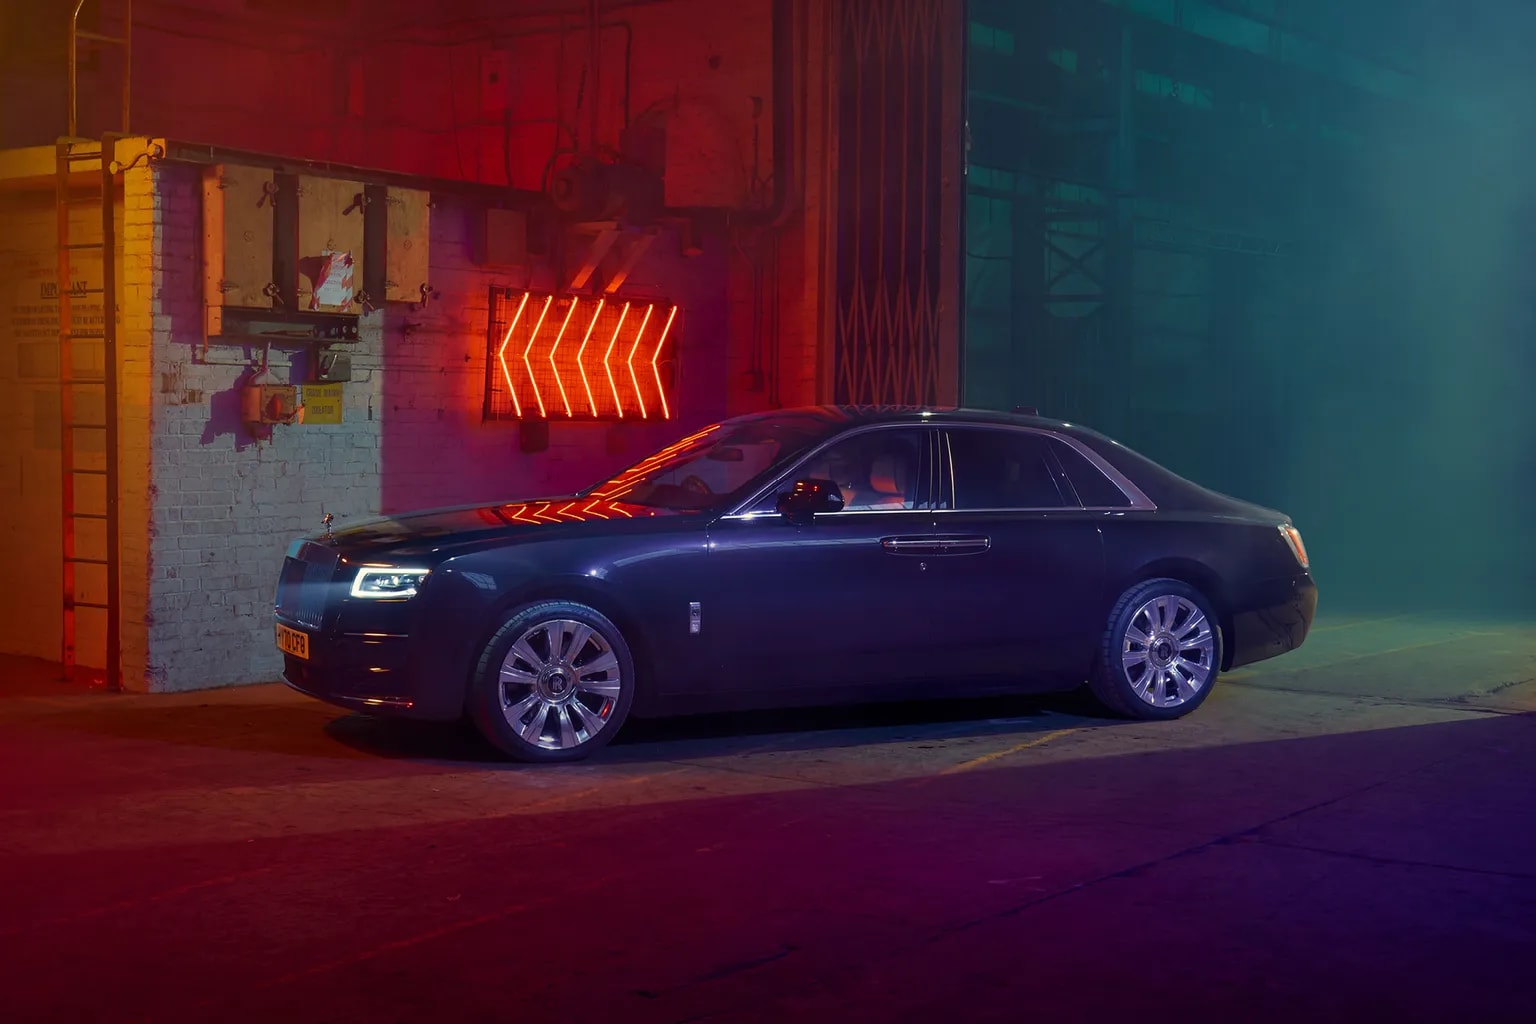 2021 Rolls-Royce Ghost Wins Luxury Car of the Year Award